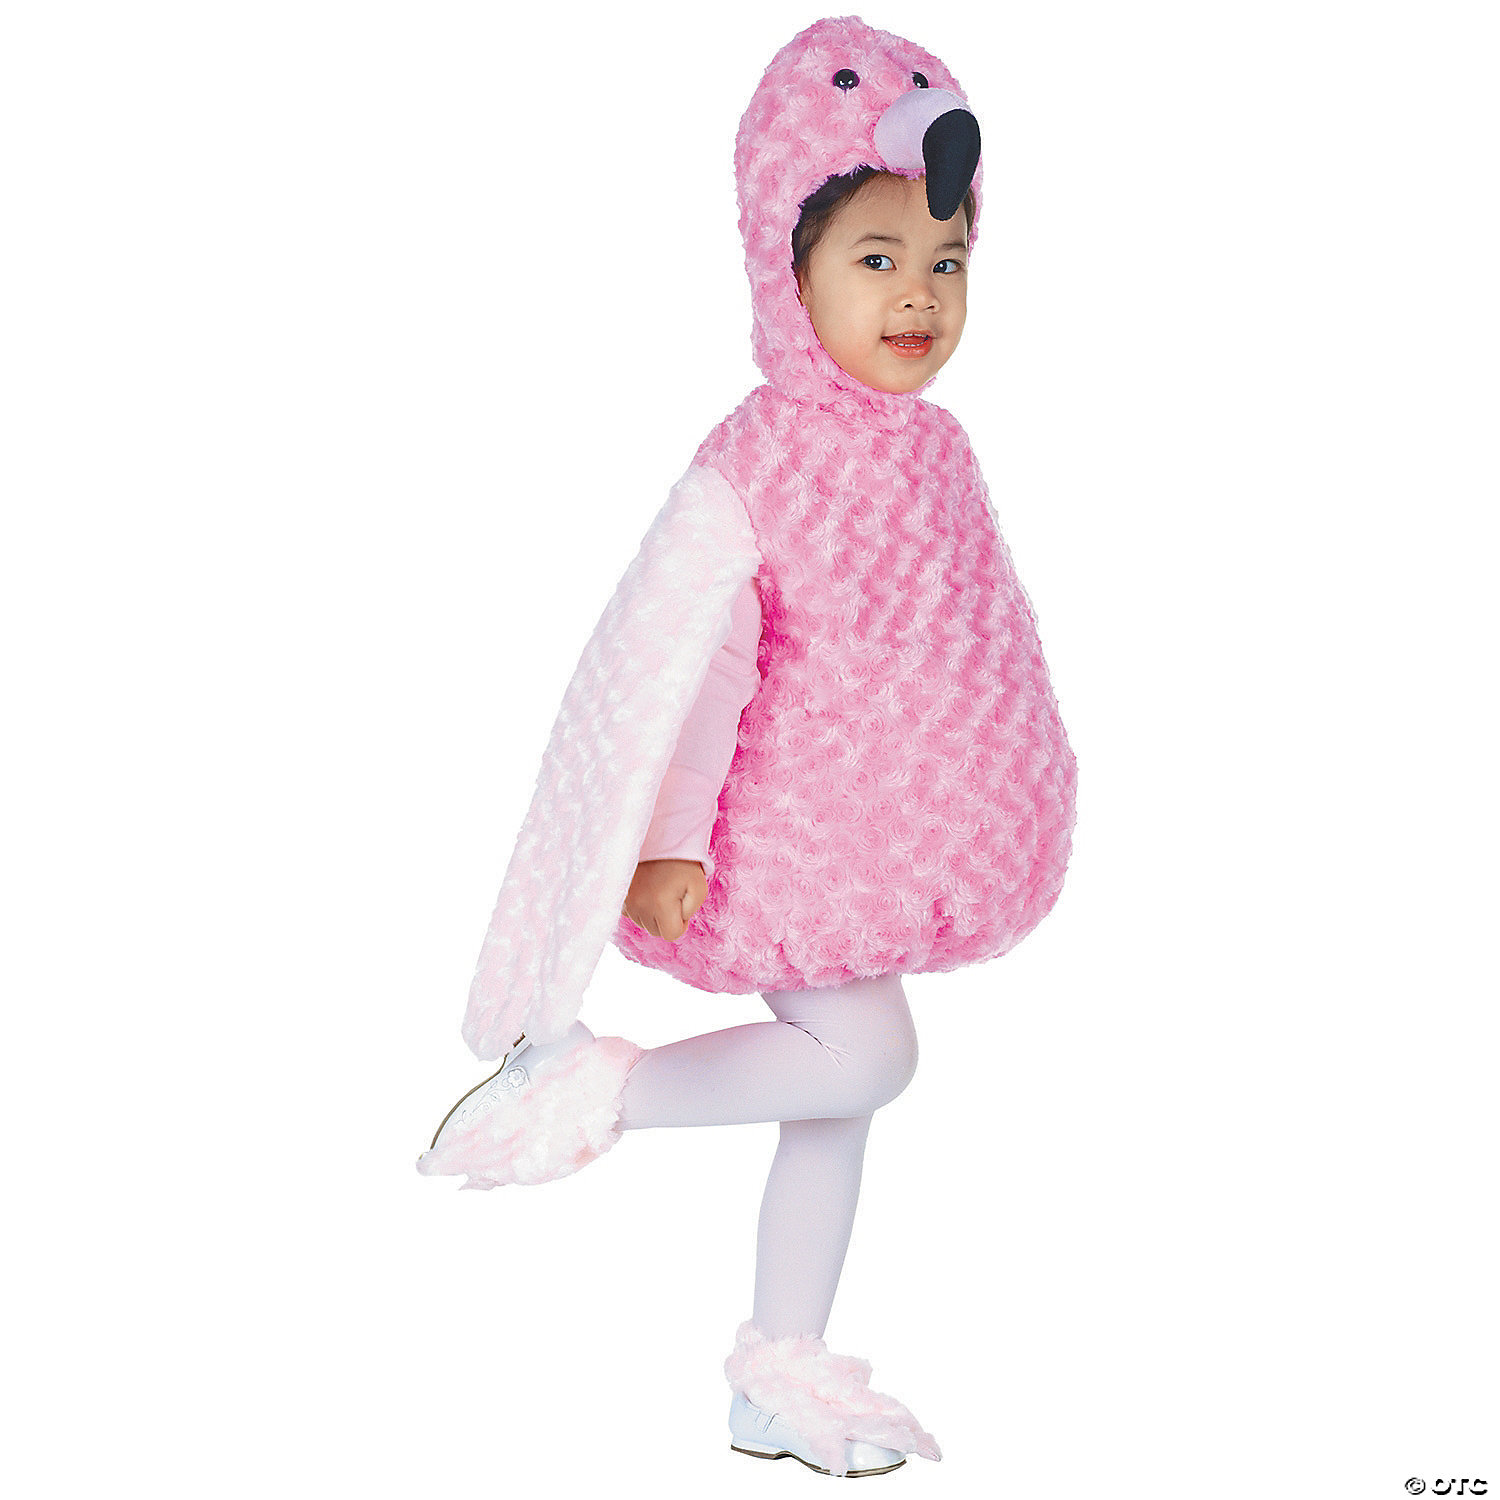 flamingo dress for kids